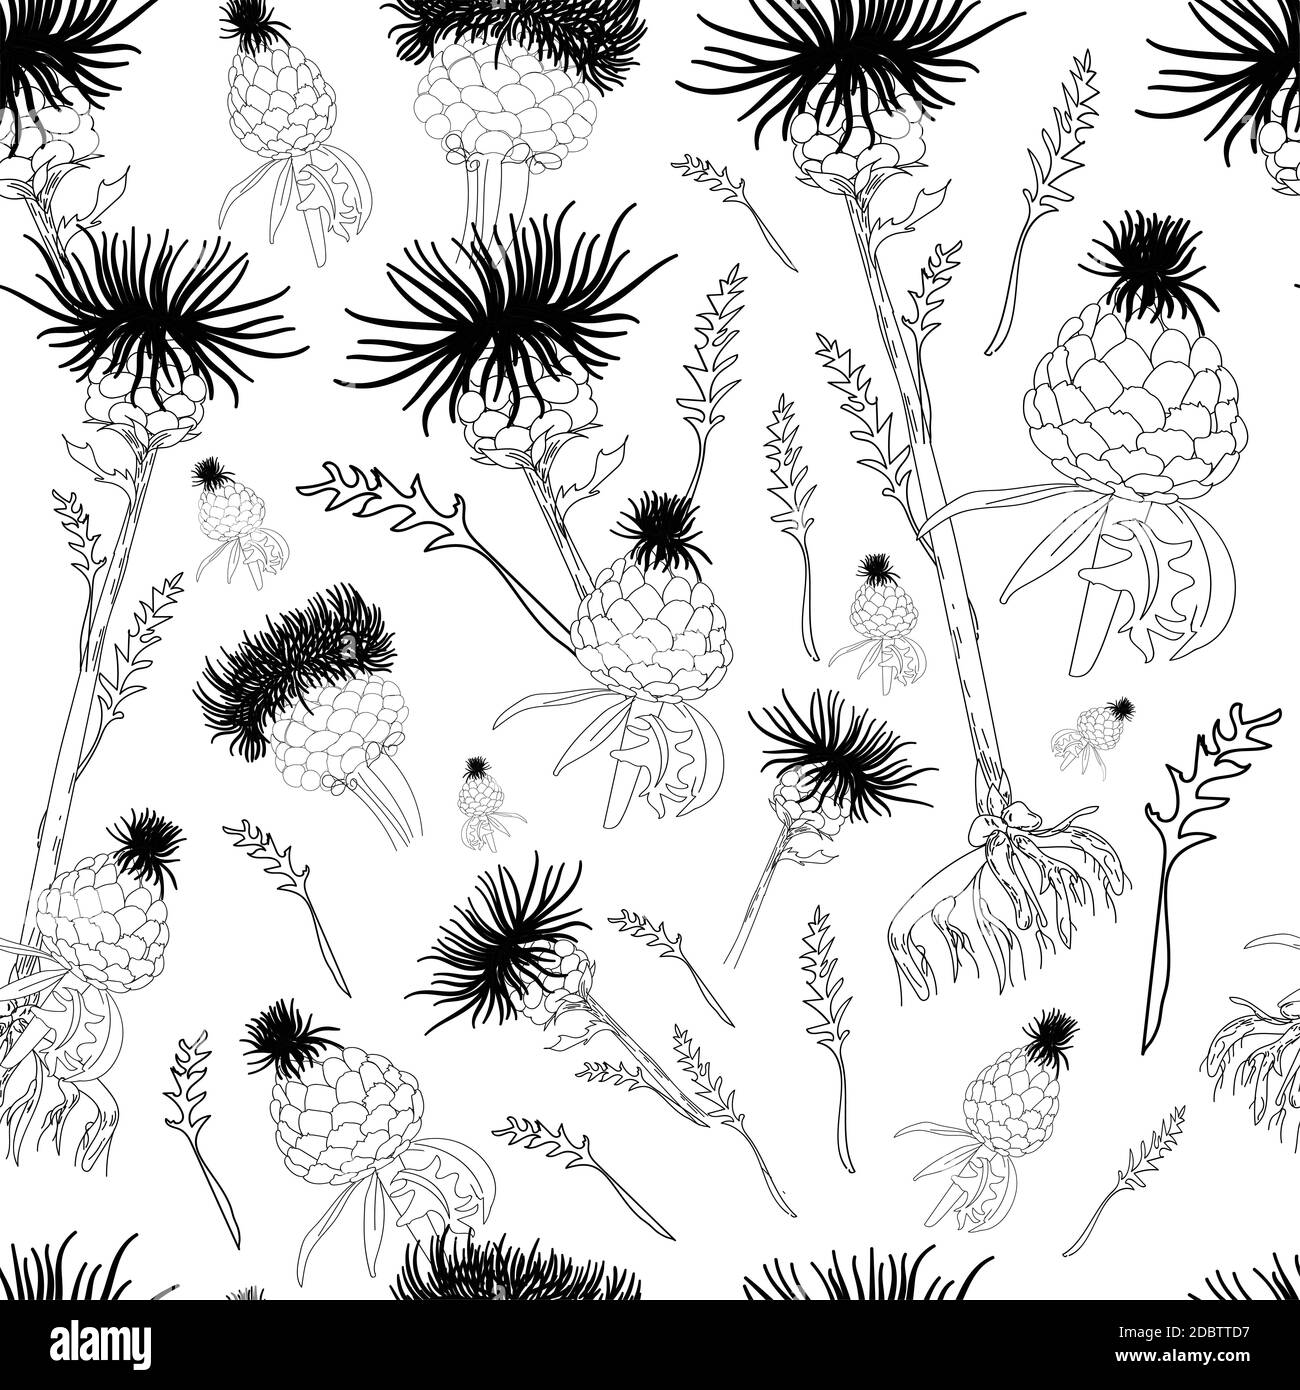 Leuzea root. Maral Root. Medicinal plants linear drawing. Botanical illustration. Stock Photo